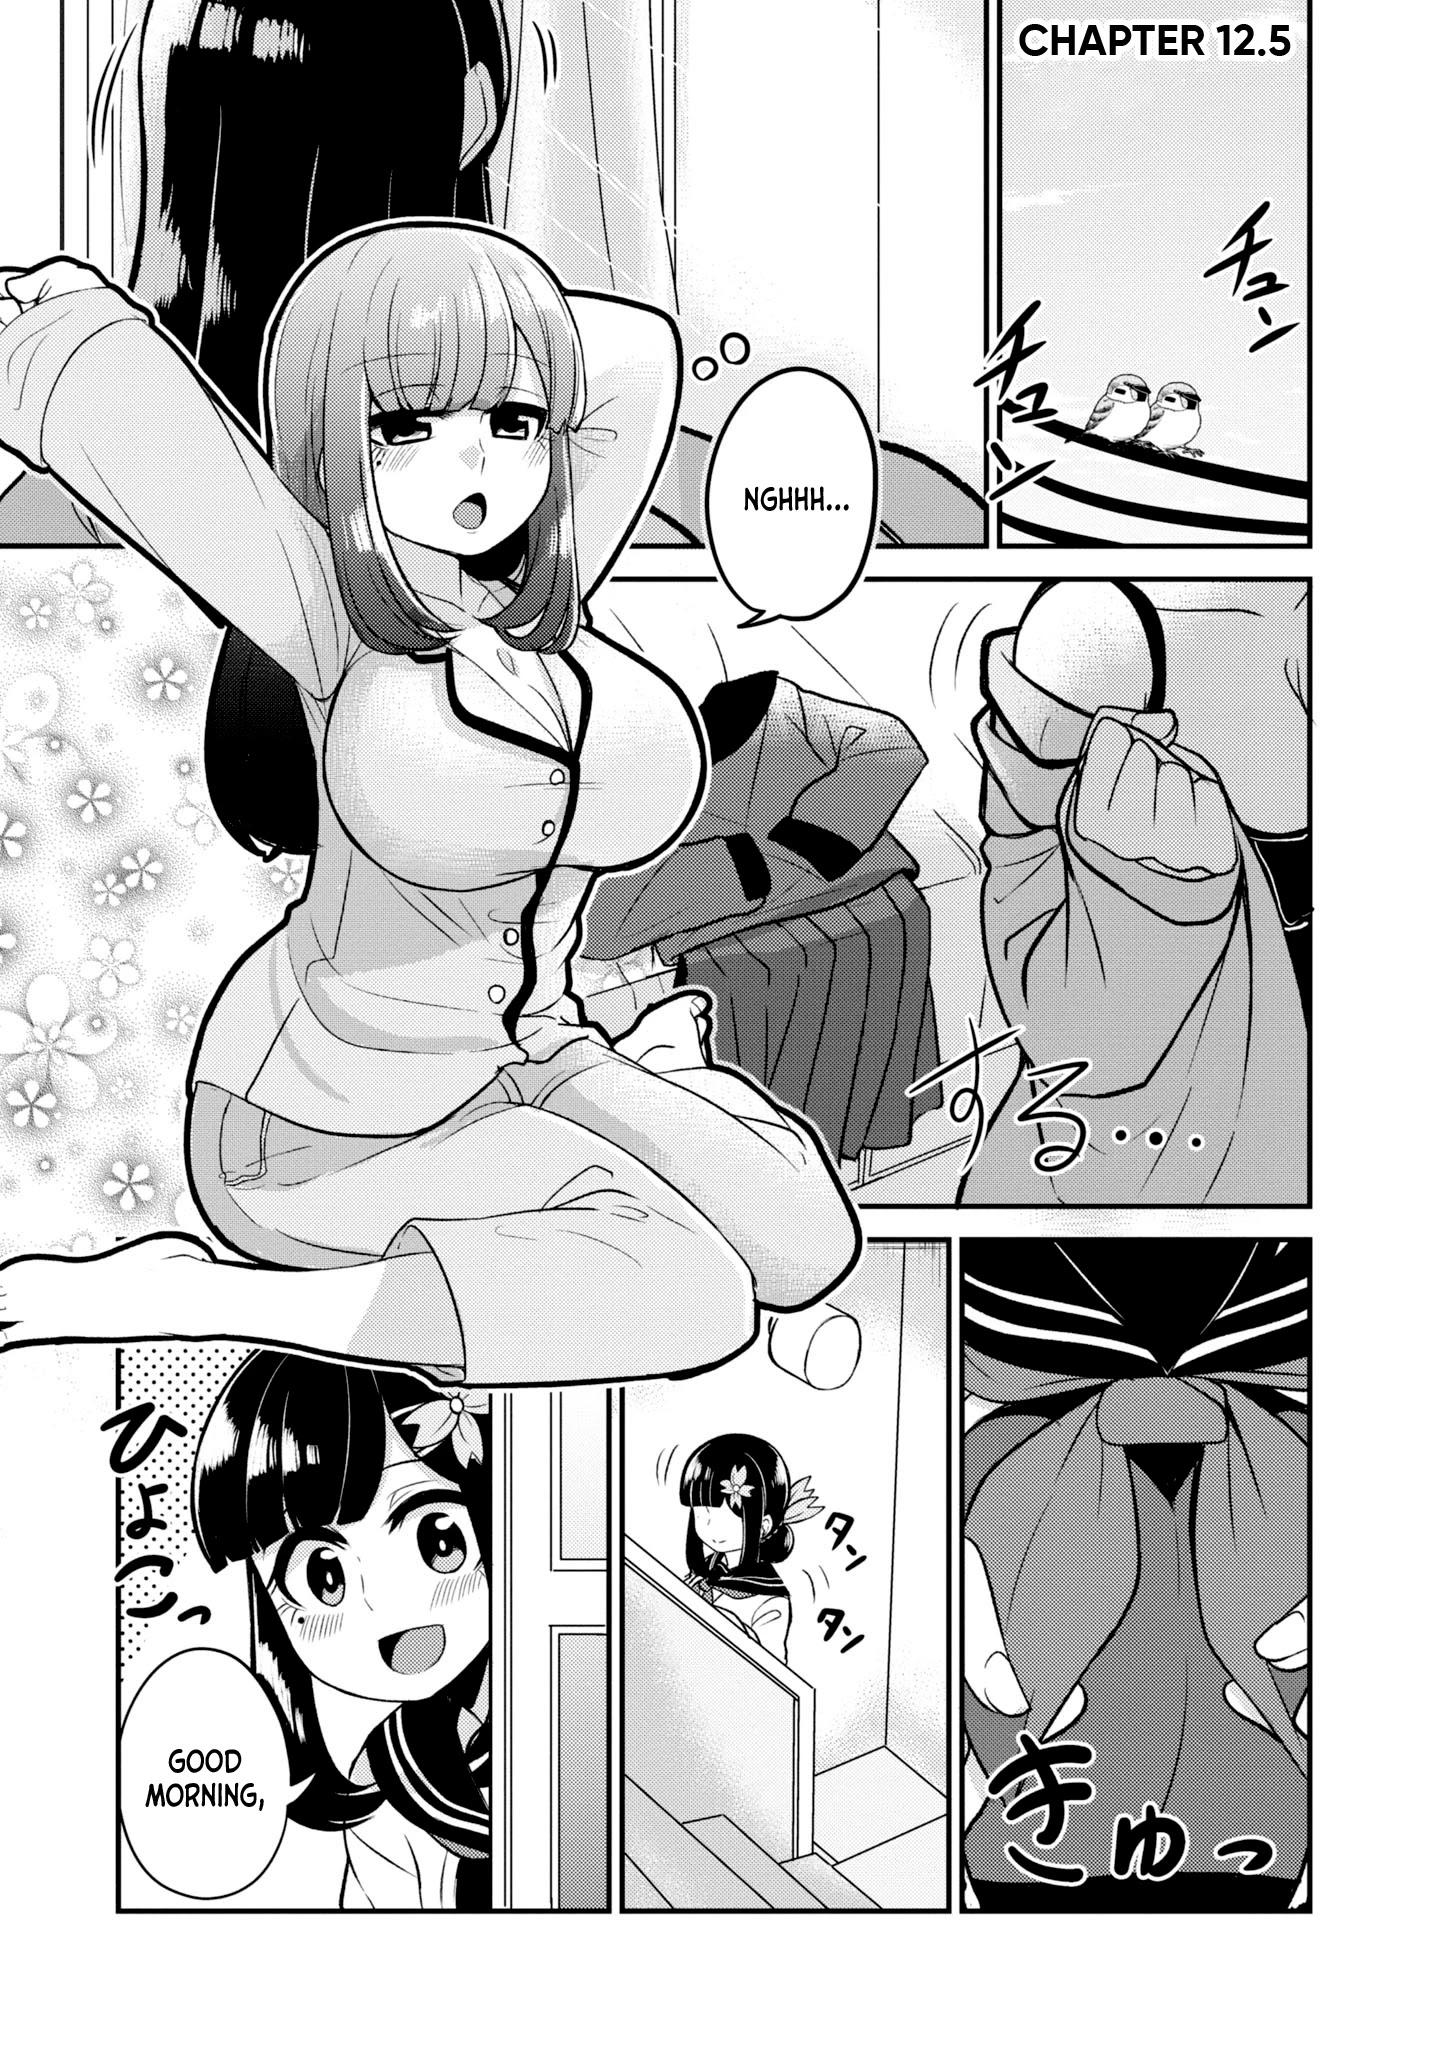 Special nursing manga